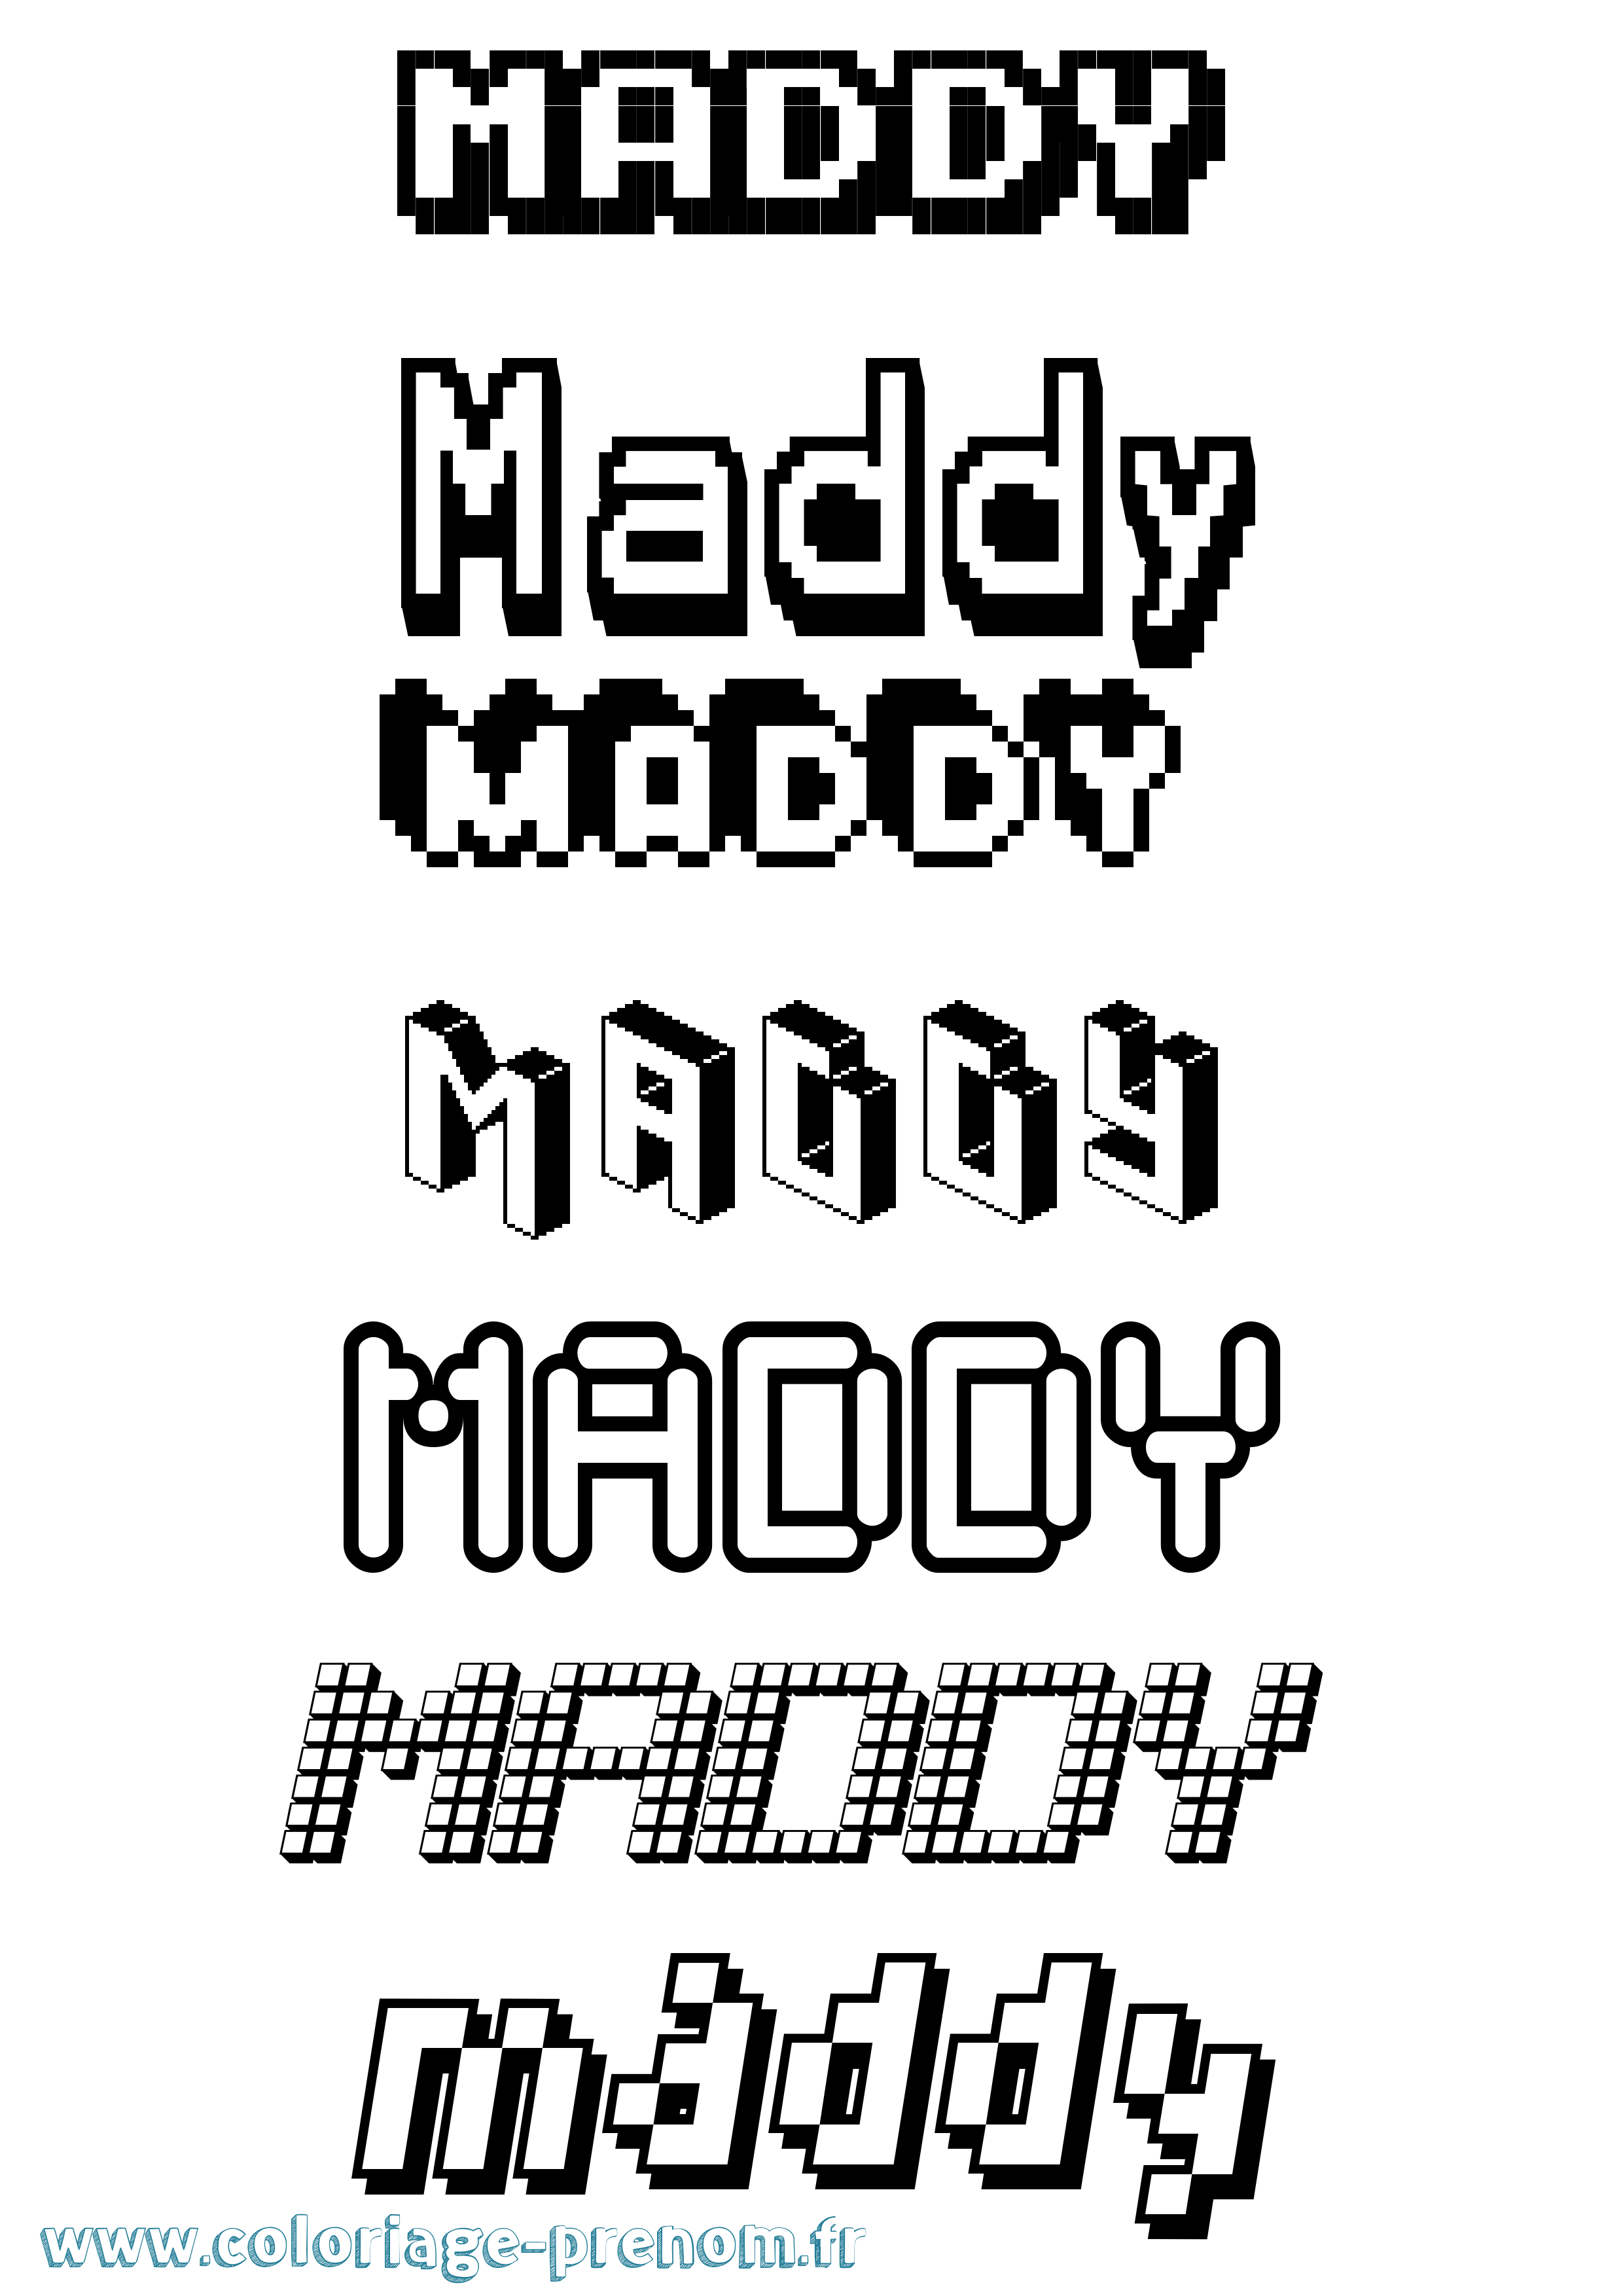 Coloriage prénom Maddy Pixel